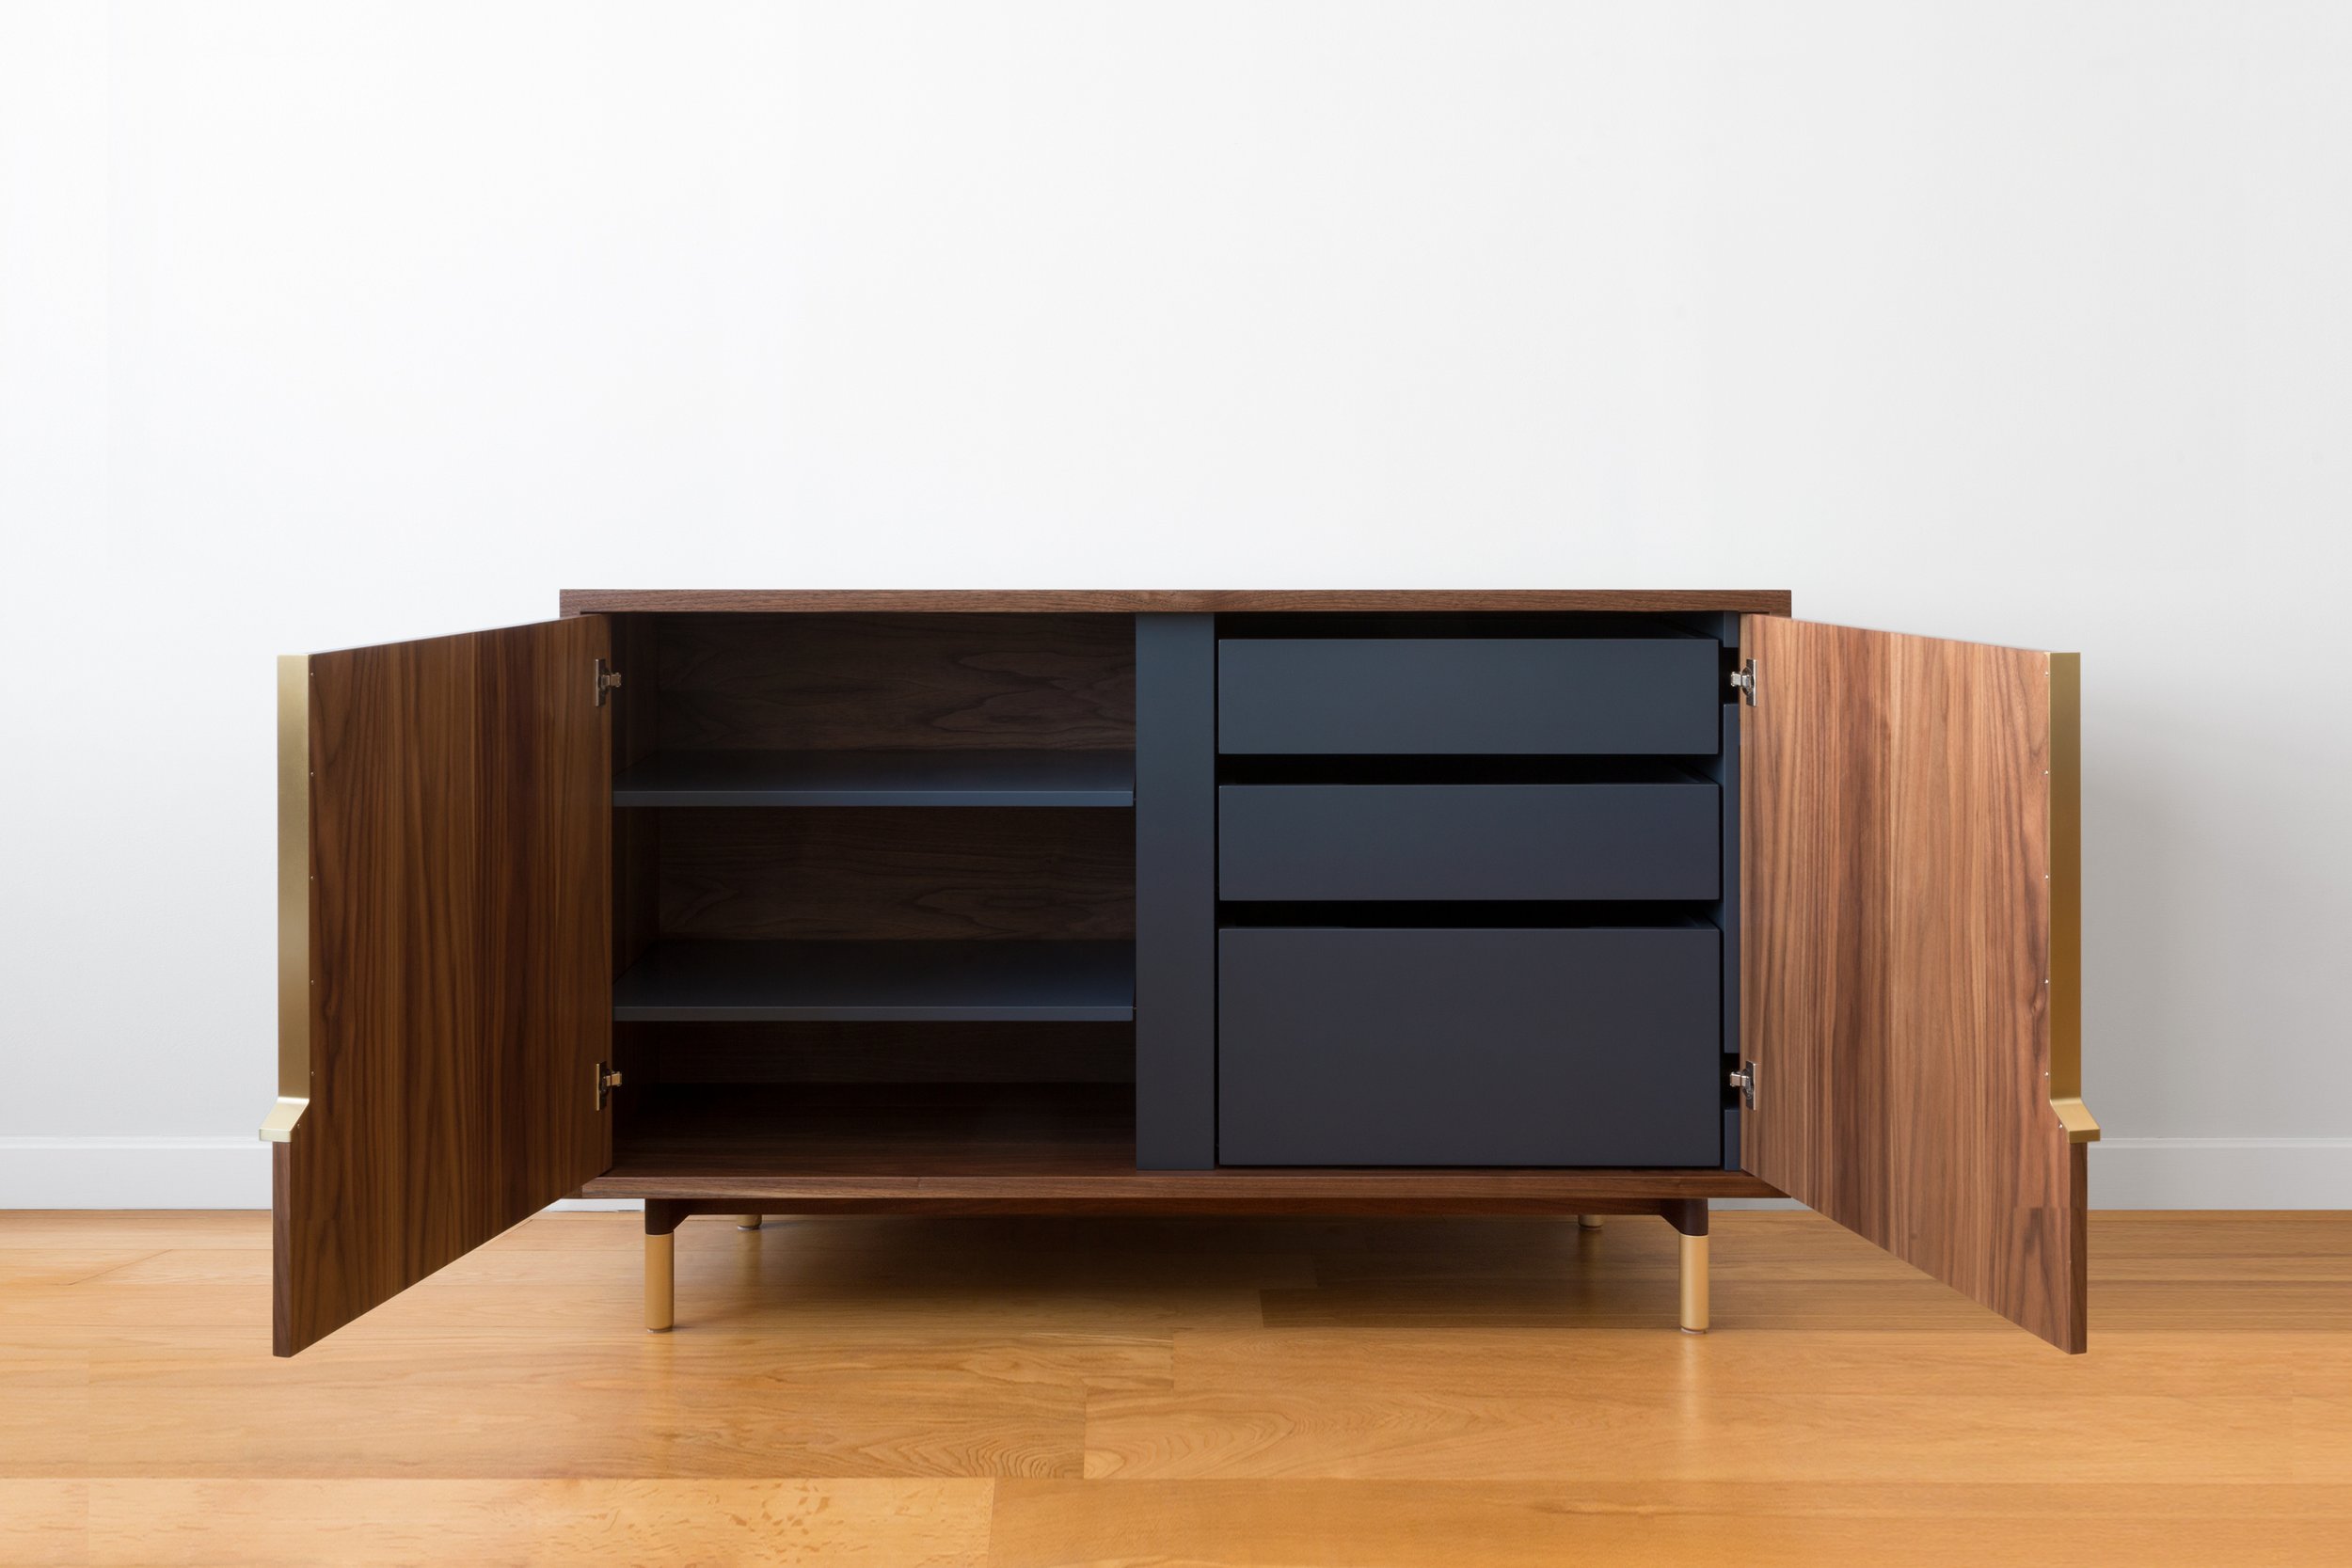 Halsey-Prime-Walnut-Cabinet-Shelves-and-Drawers-3x2.jpg